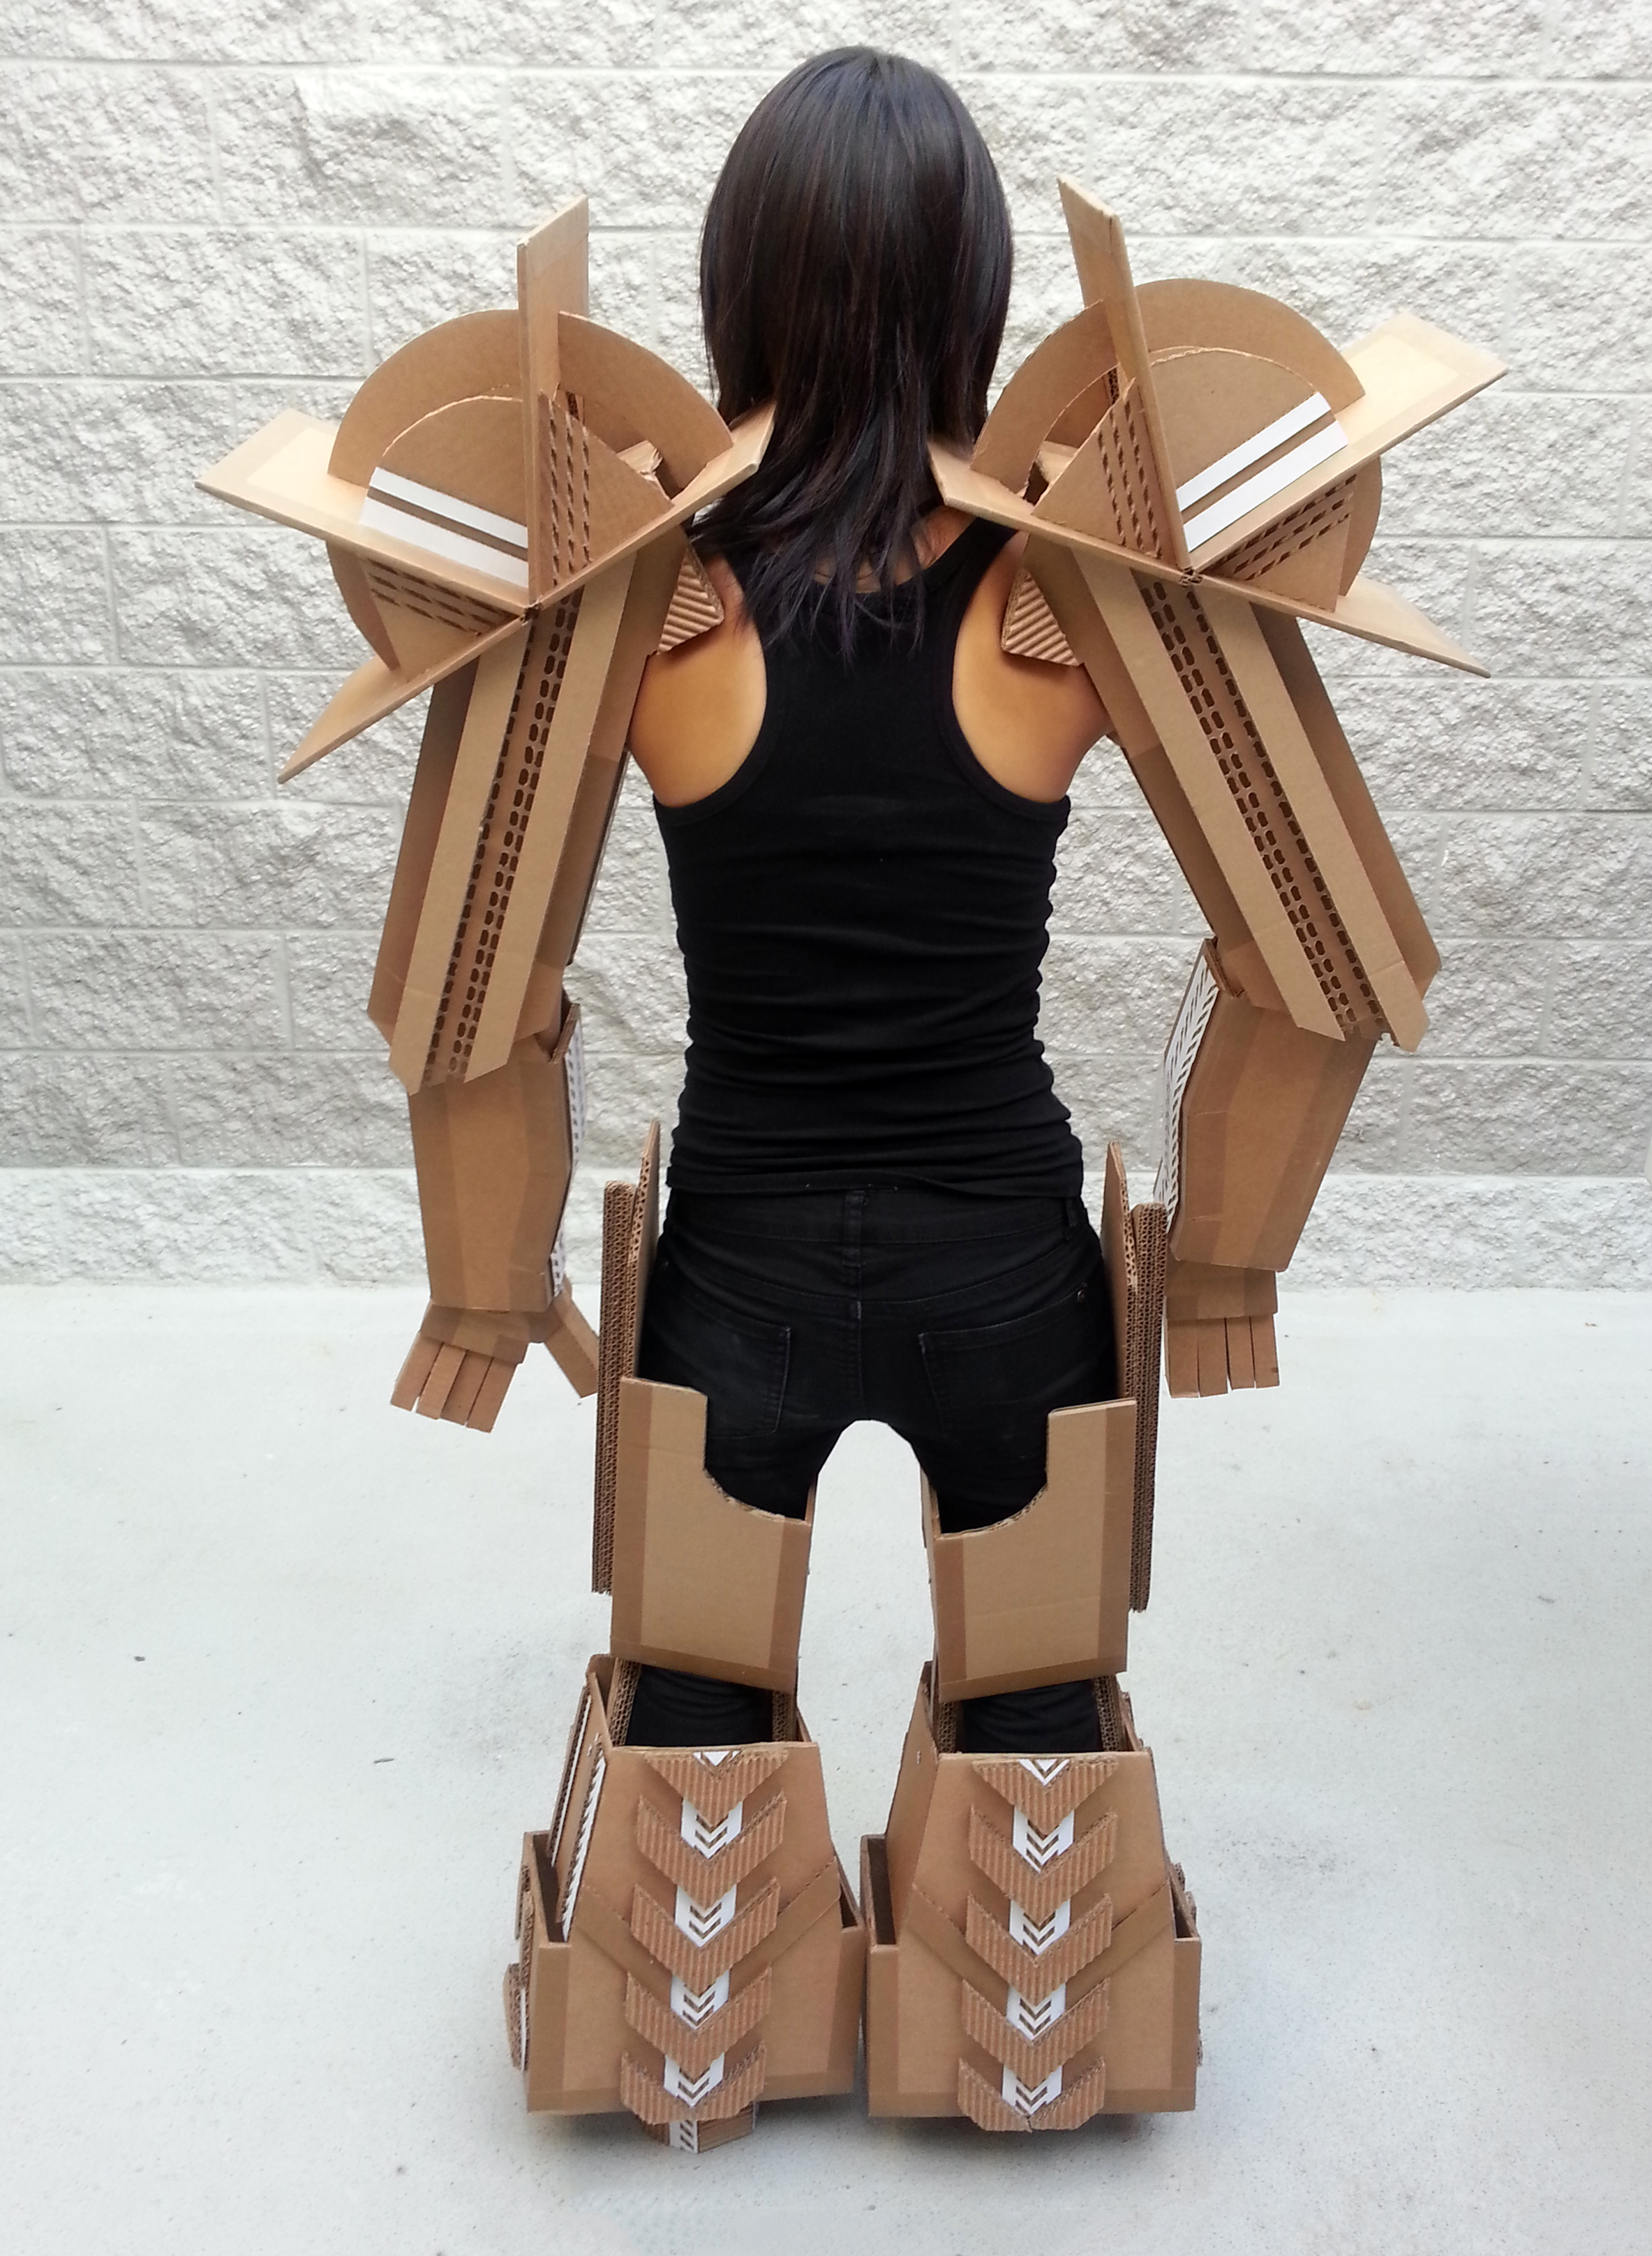 Cardboard Robonoid